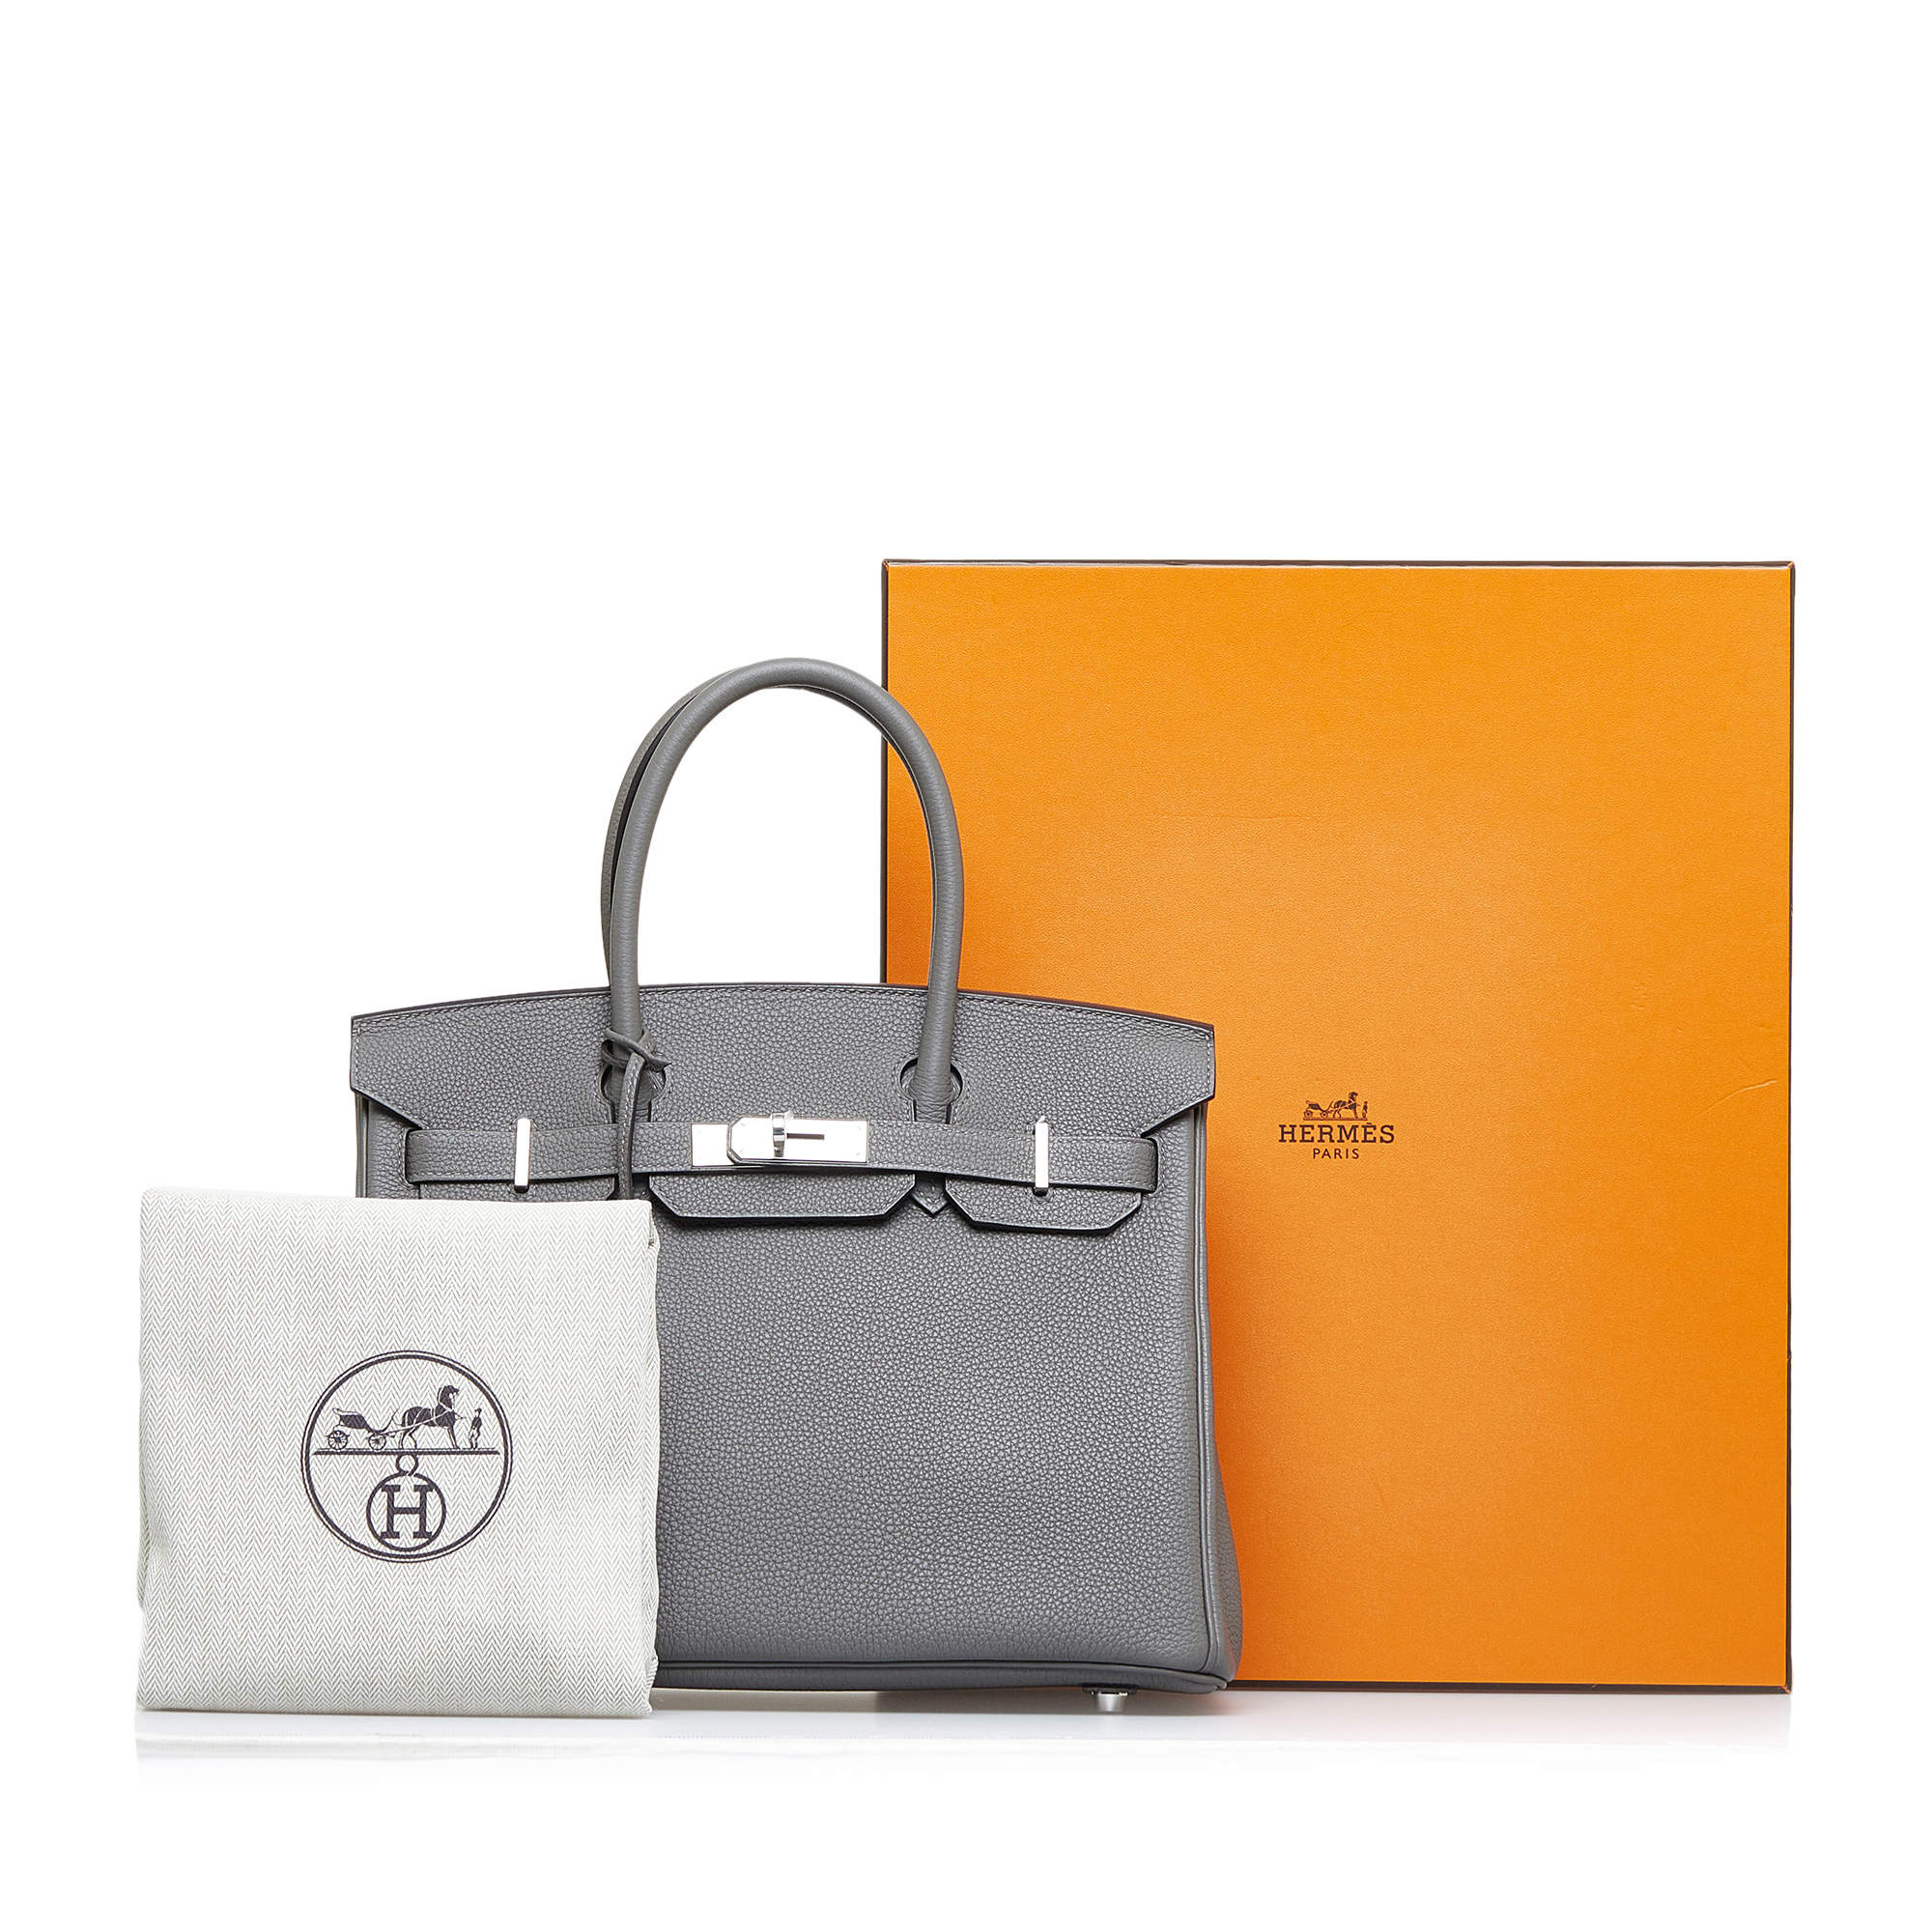 Hermes Personal Birkin bag 25 Gris mouette/ Black Epsom leather